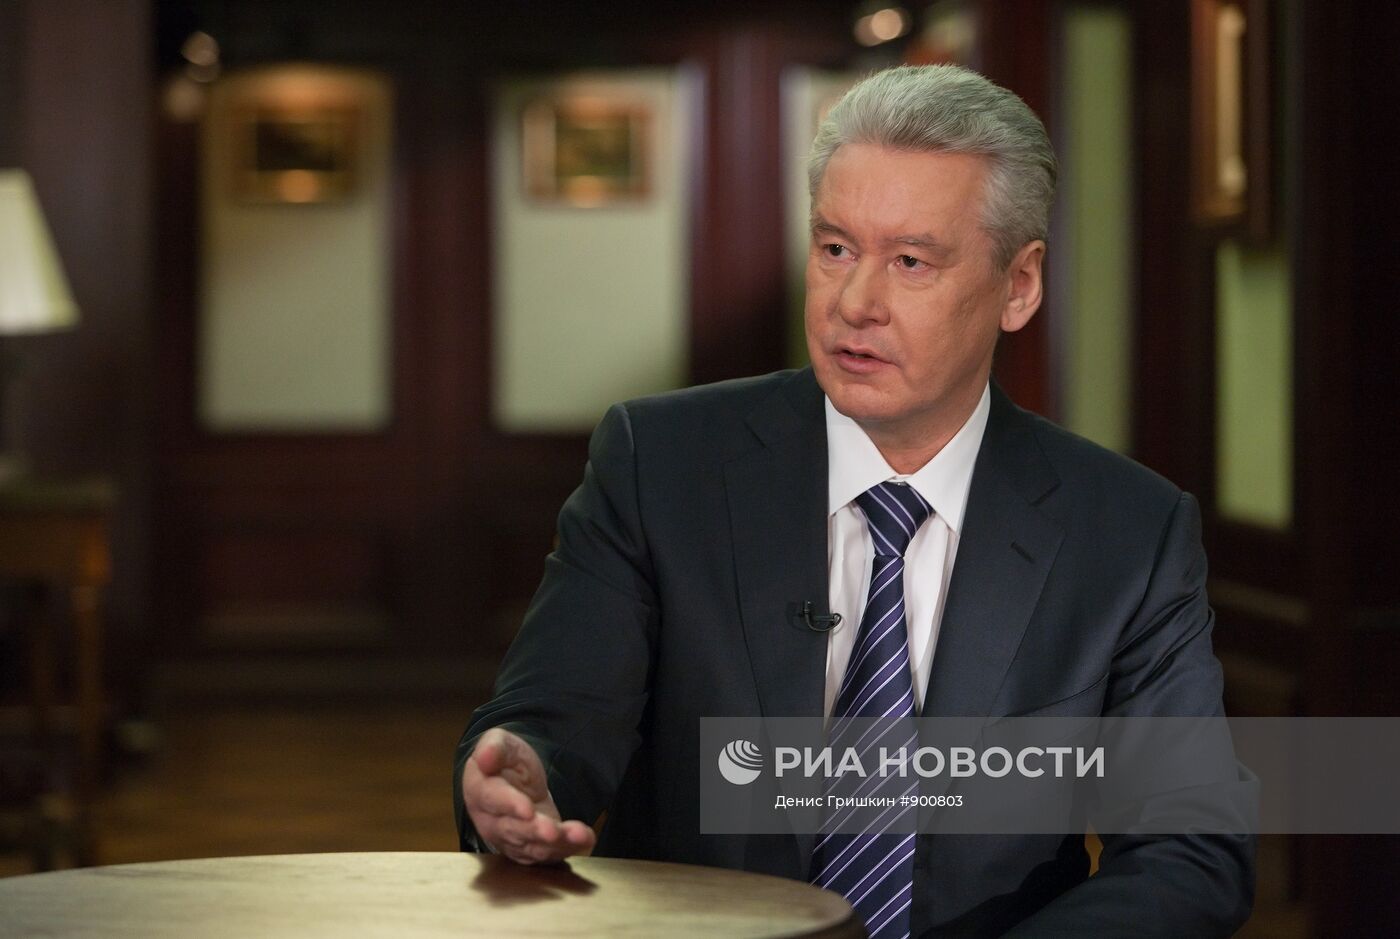 Мэр Москвы Сергей Собянин дал интервью